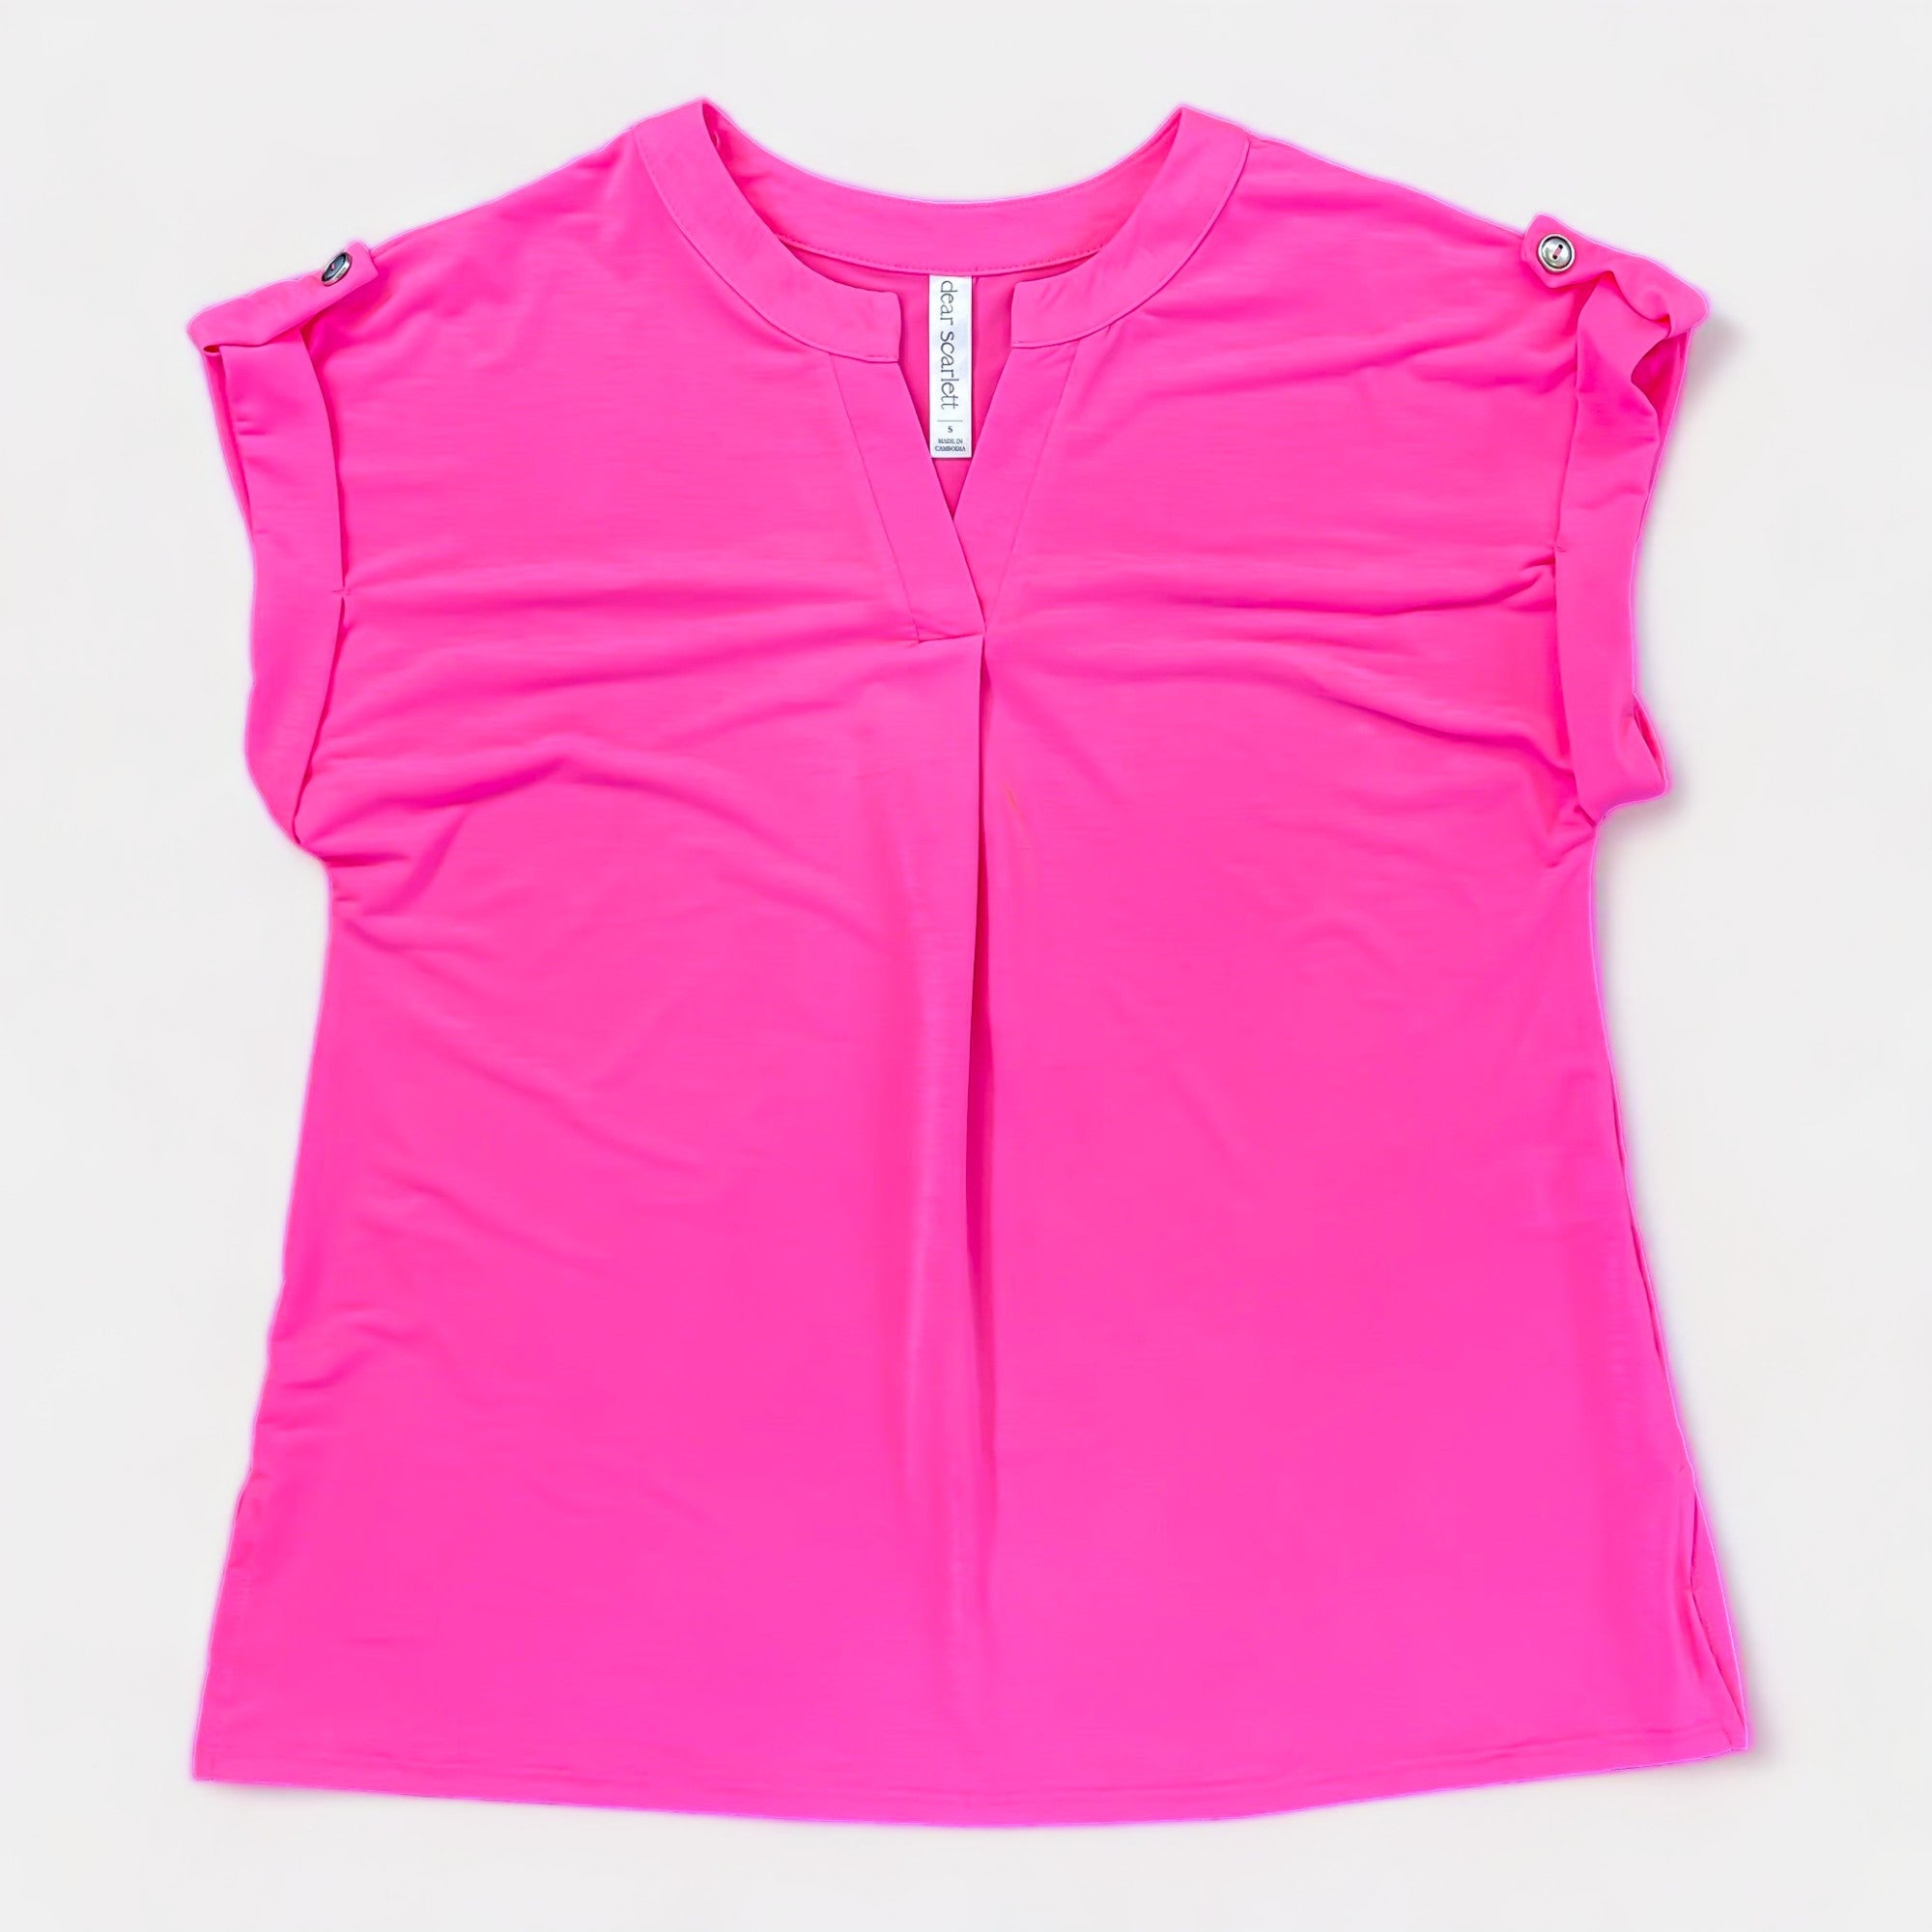 Neon Pink Lizzy Short Sleeve Top